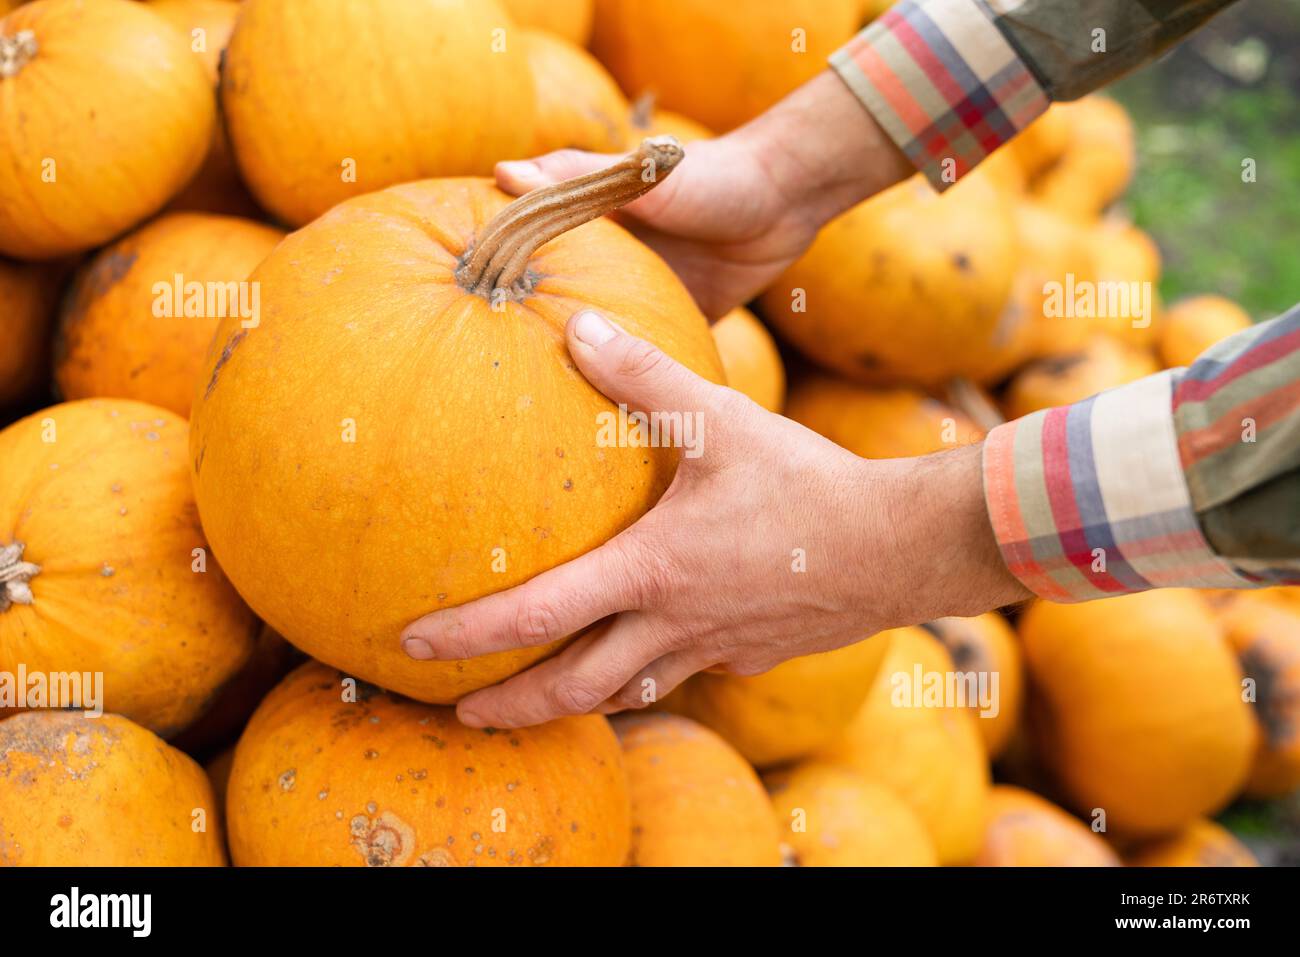 Farmer takes a pumpkin from a pile of pumpkins Stock Photo